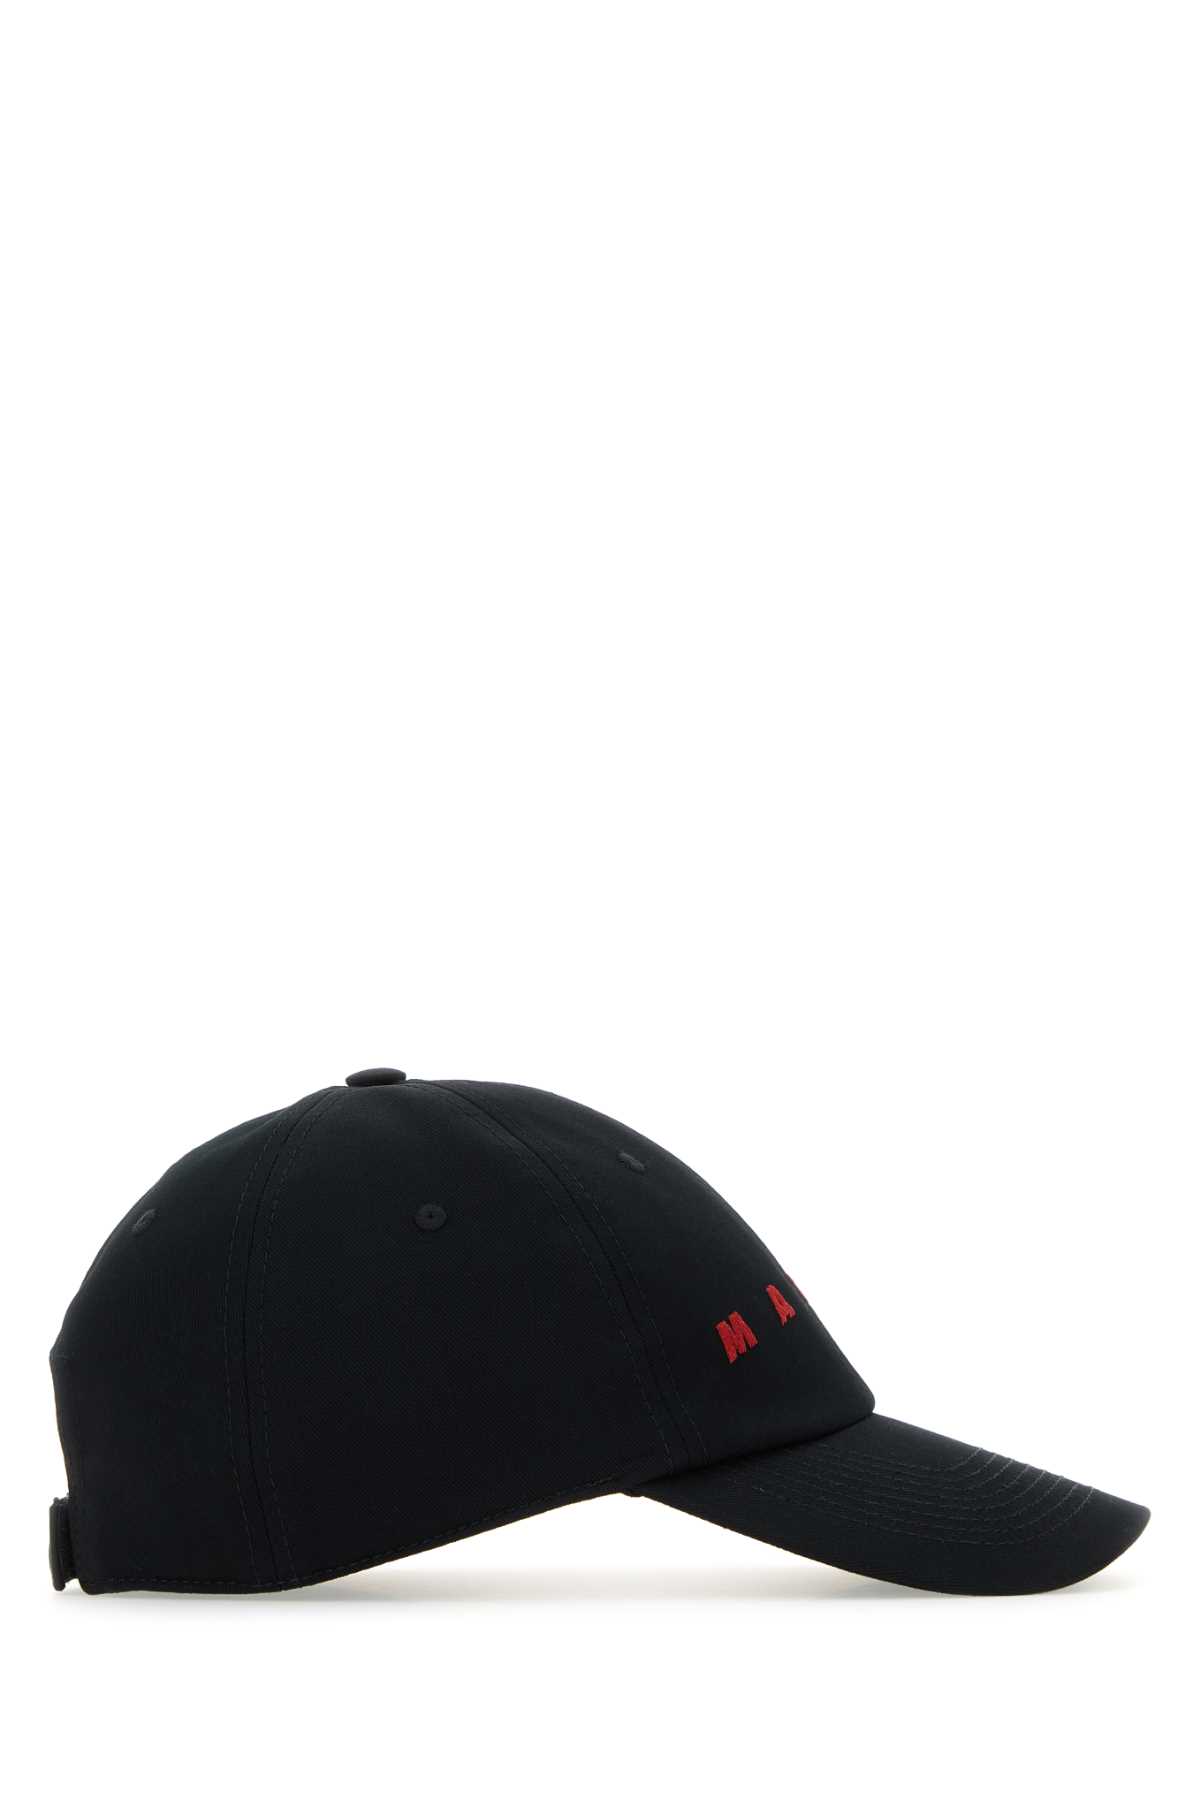 Marni Black Cotton Baseball Hat